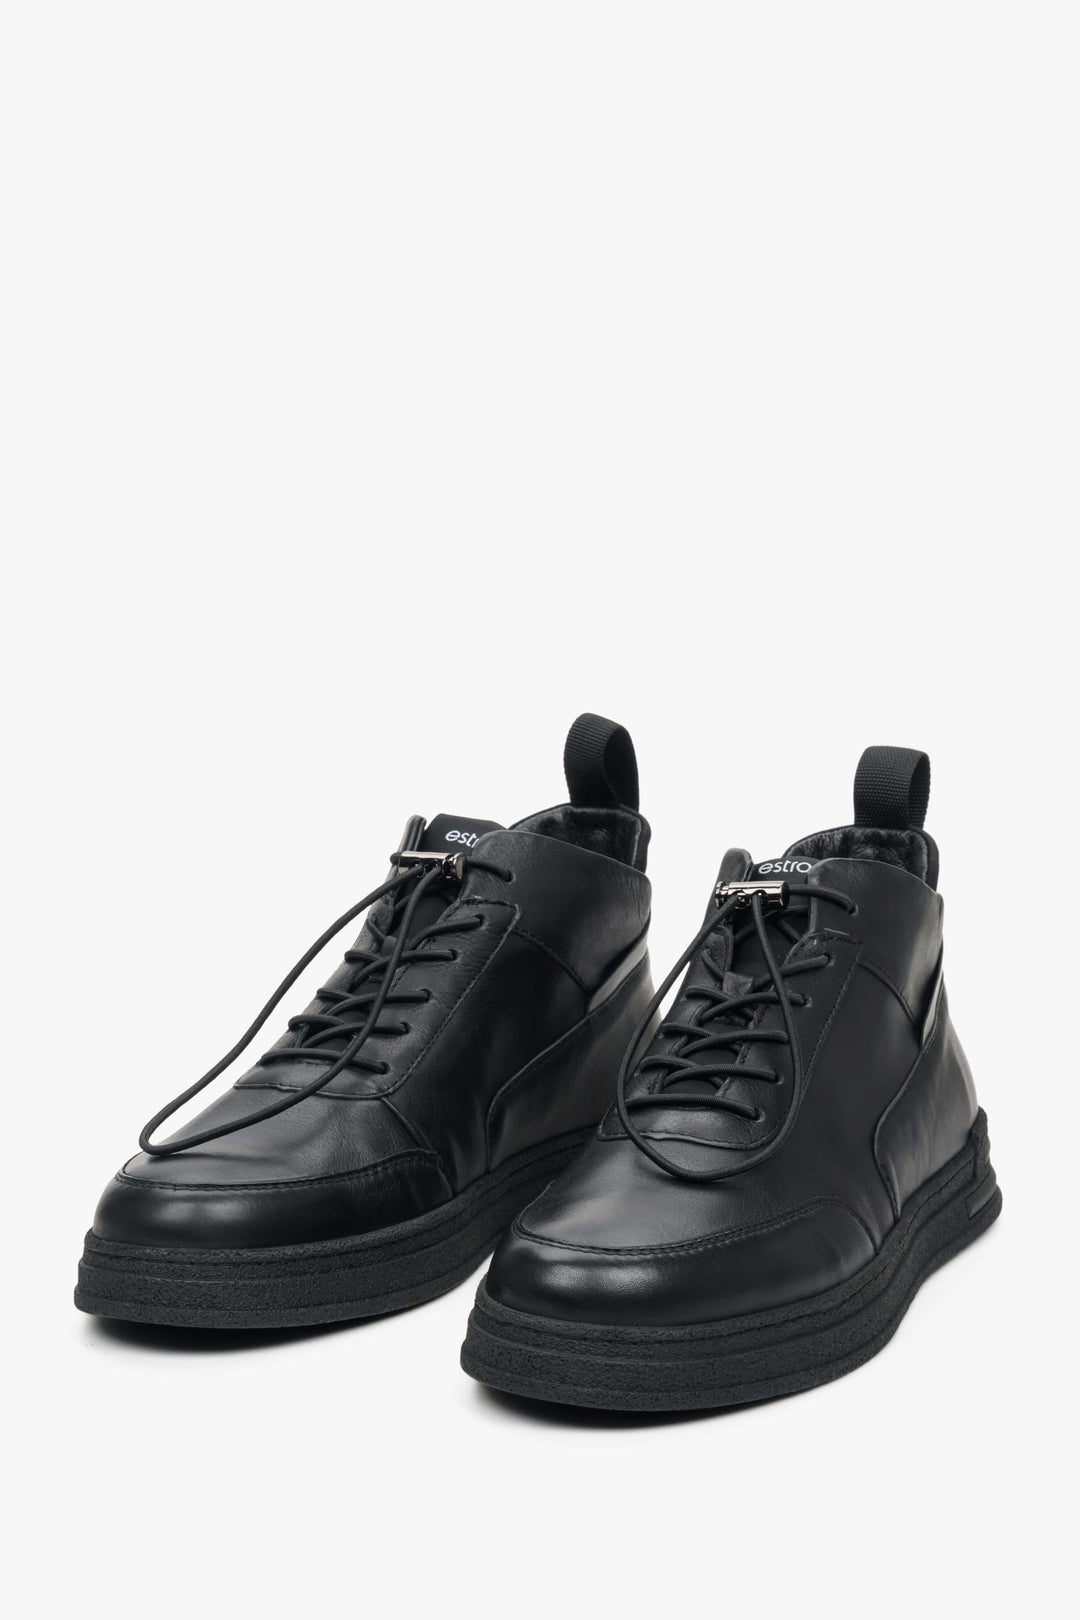 Wysokie sneakersy męskie ze skóry naturalnej, czarne Estro ER00112213